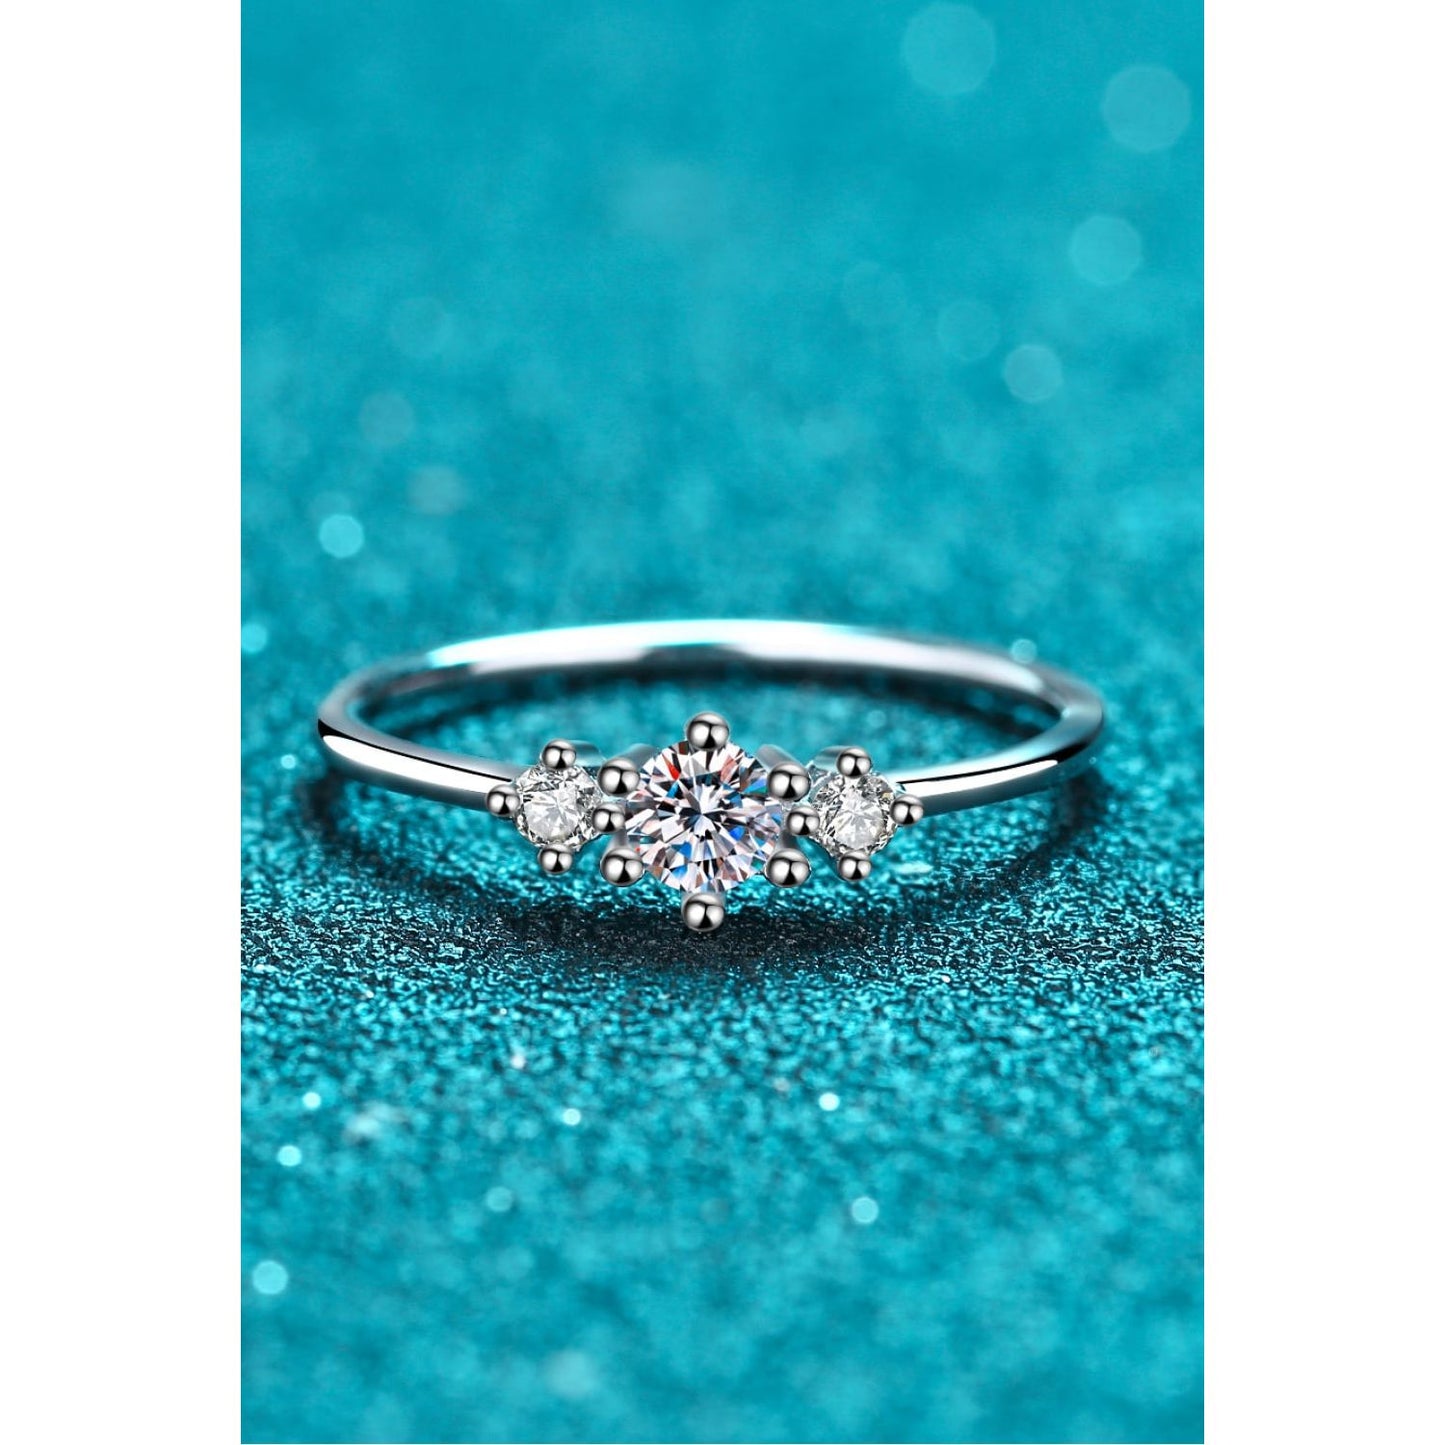 Dream Date Night Moissanite 925 Sterling Silver Ring - TiffanyzKlozet